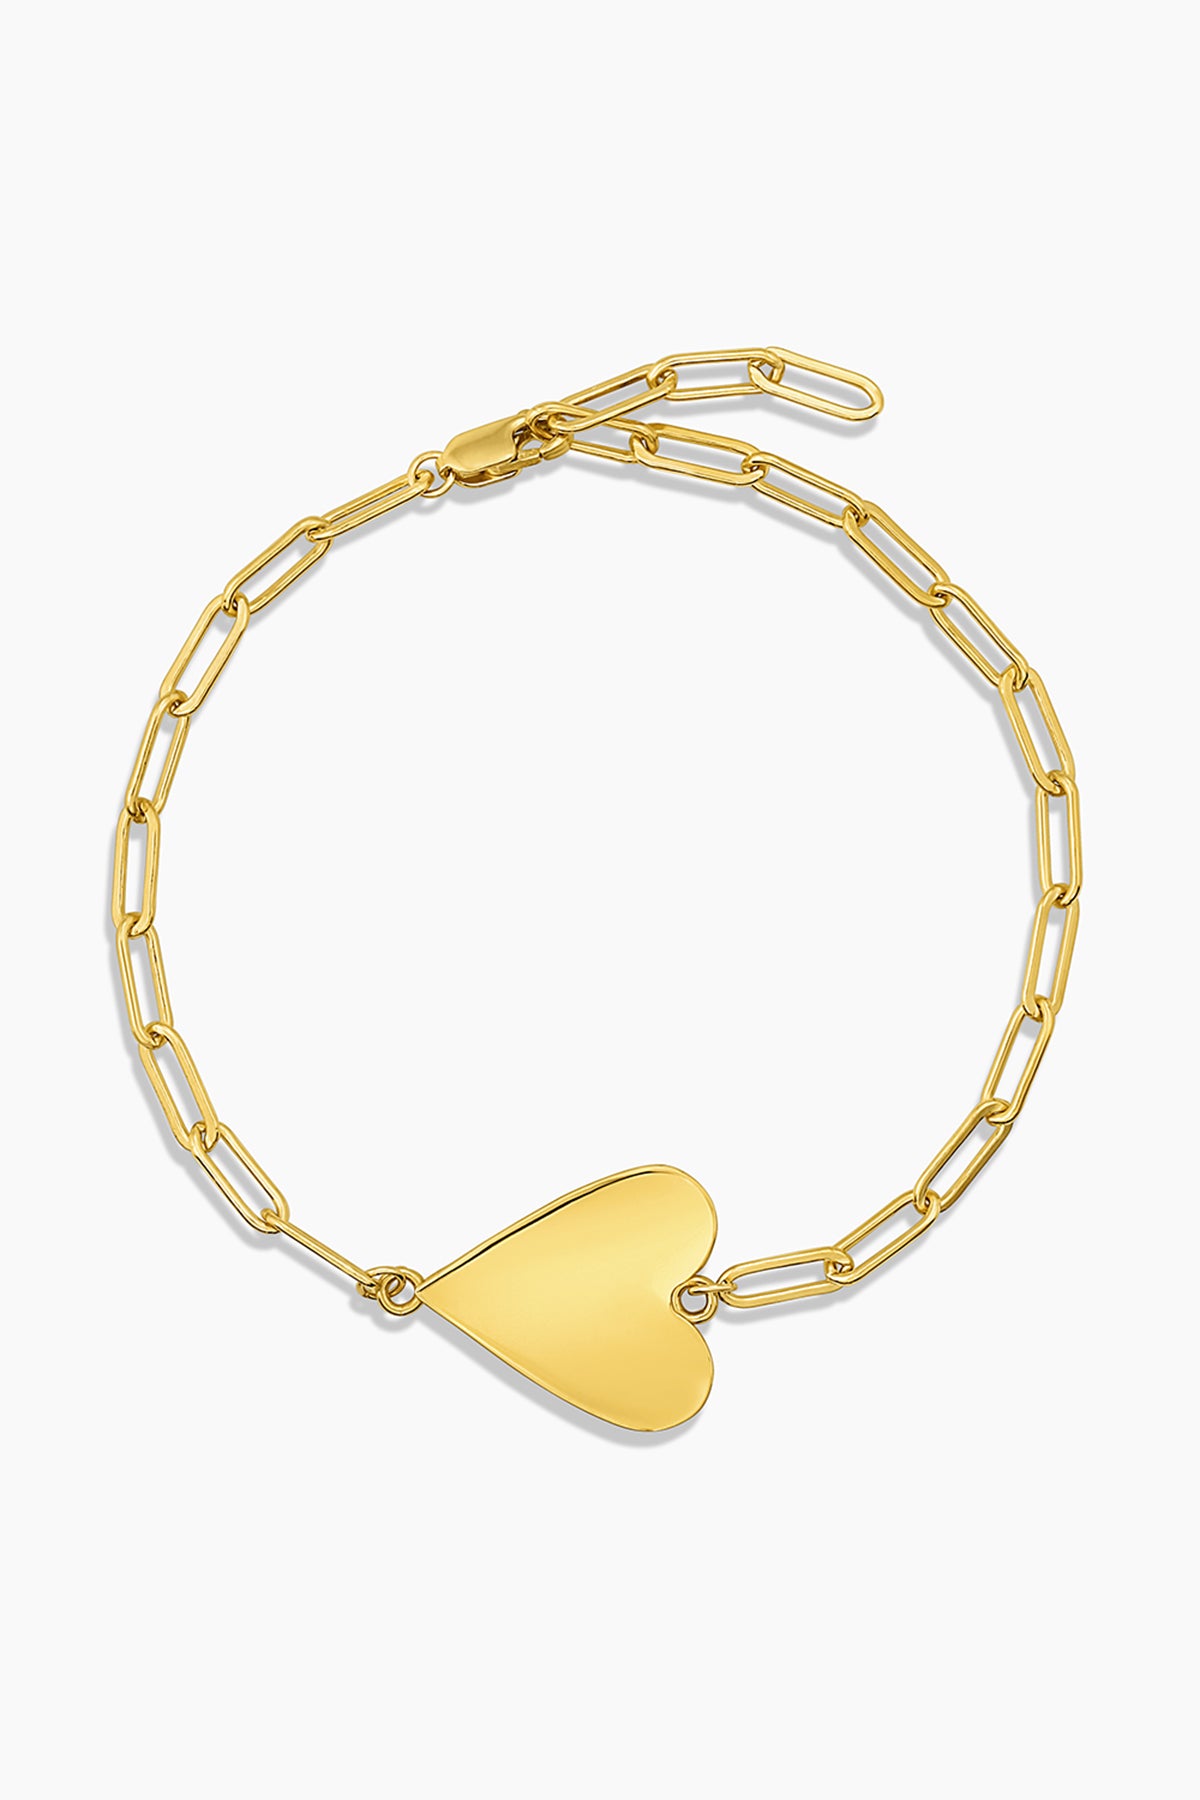   A AMAYA HEART BRACELET BY THATCH chain bracelet with a heart charm. 